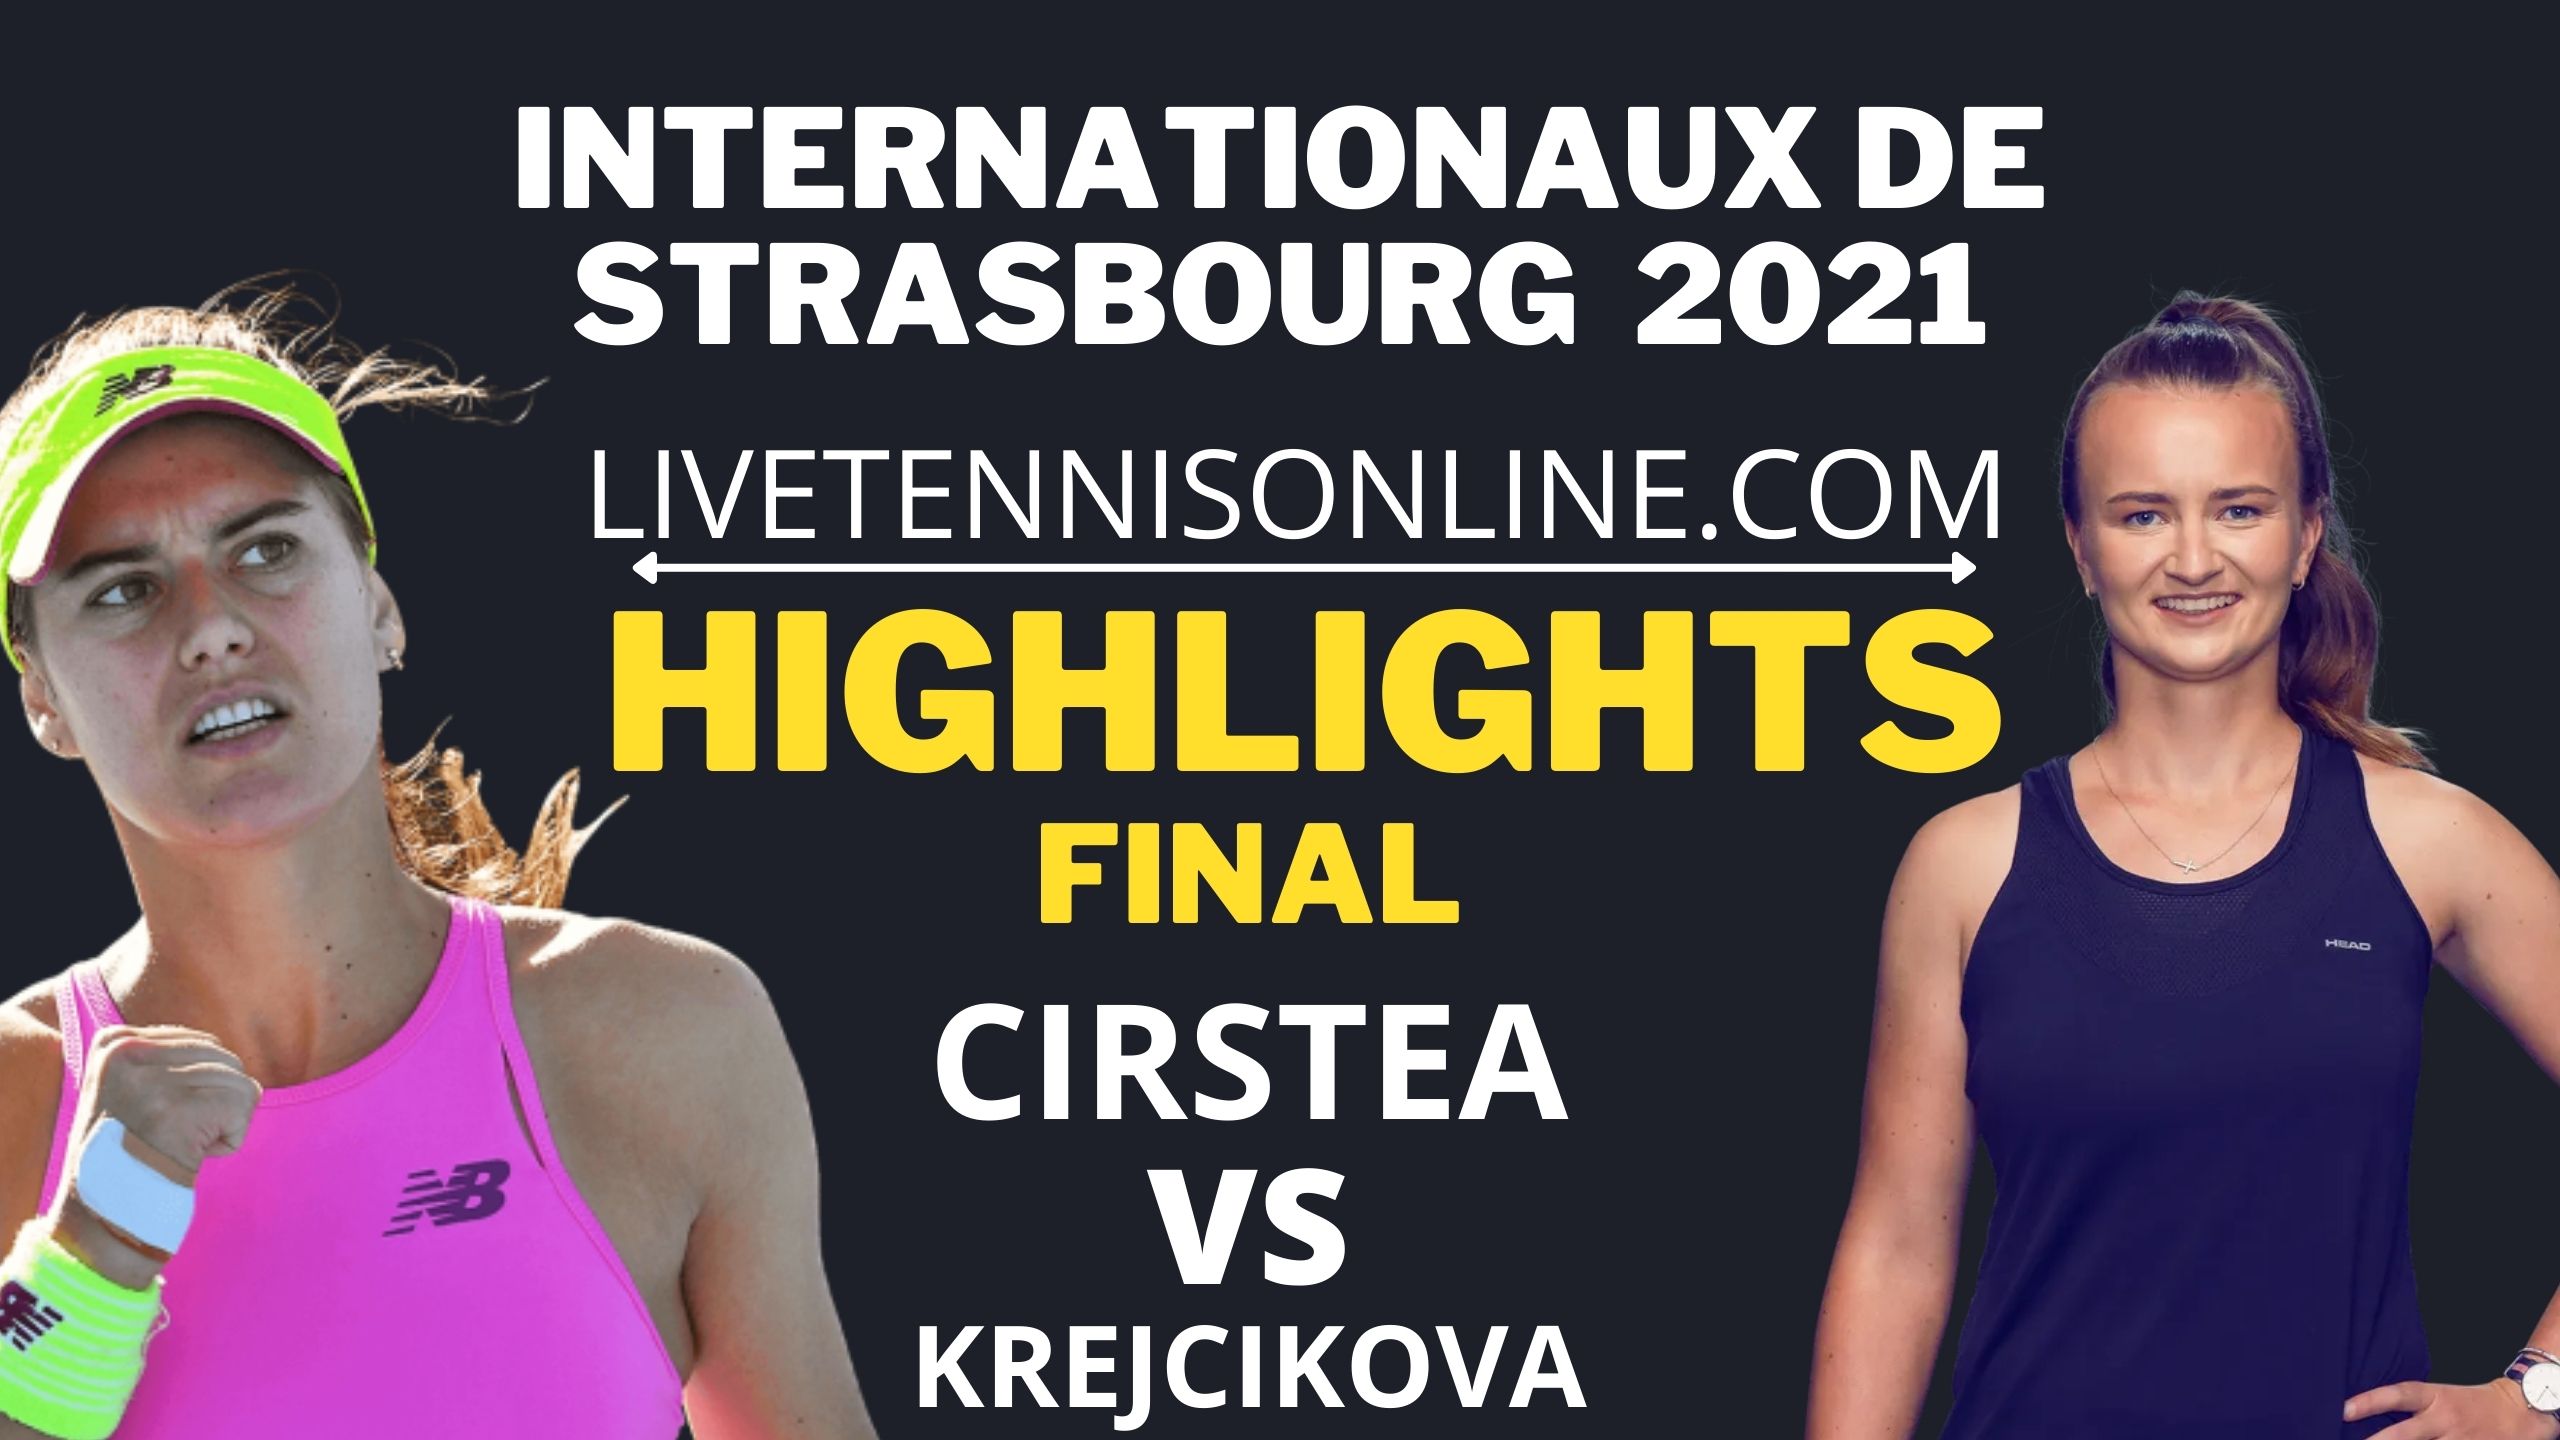 Cirstea Vs Krejcikova Final Highlights 2021